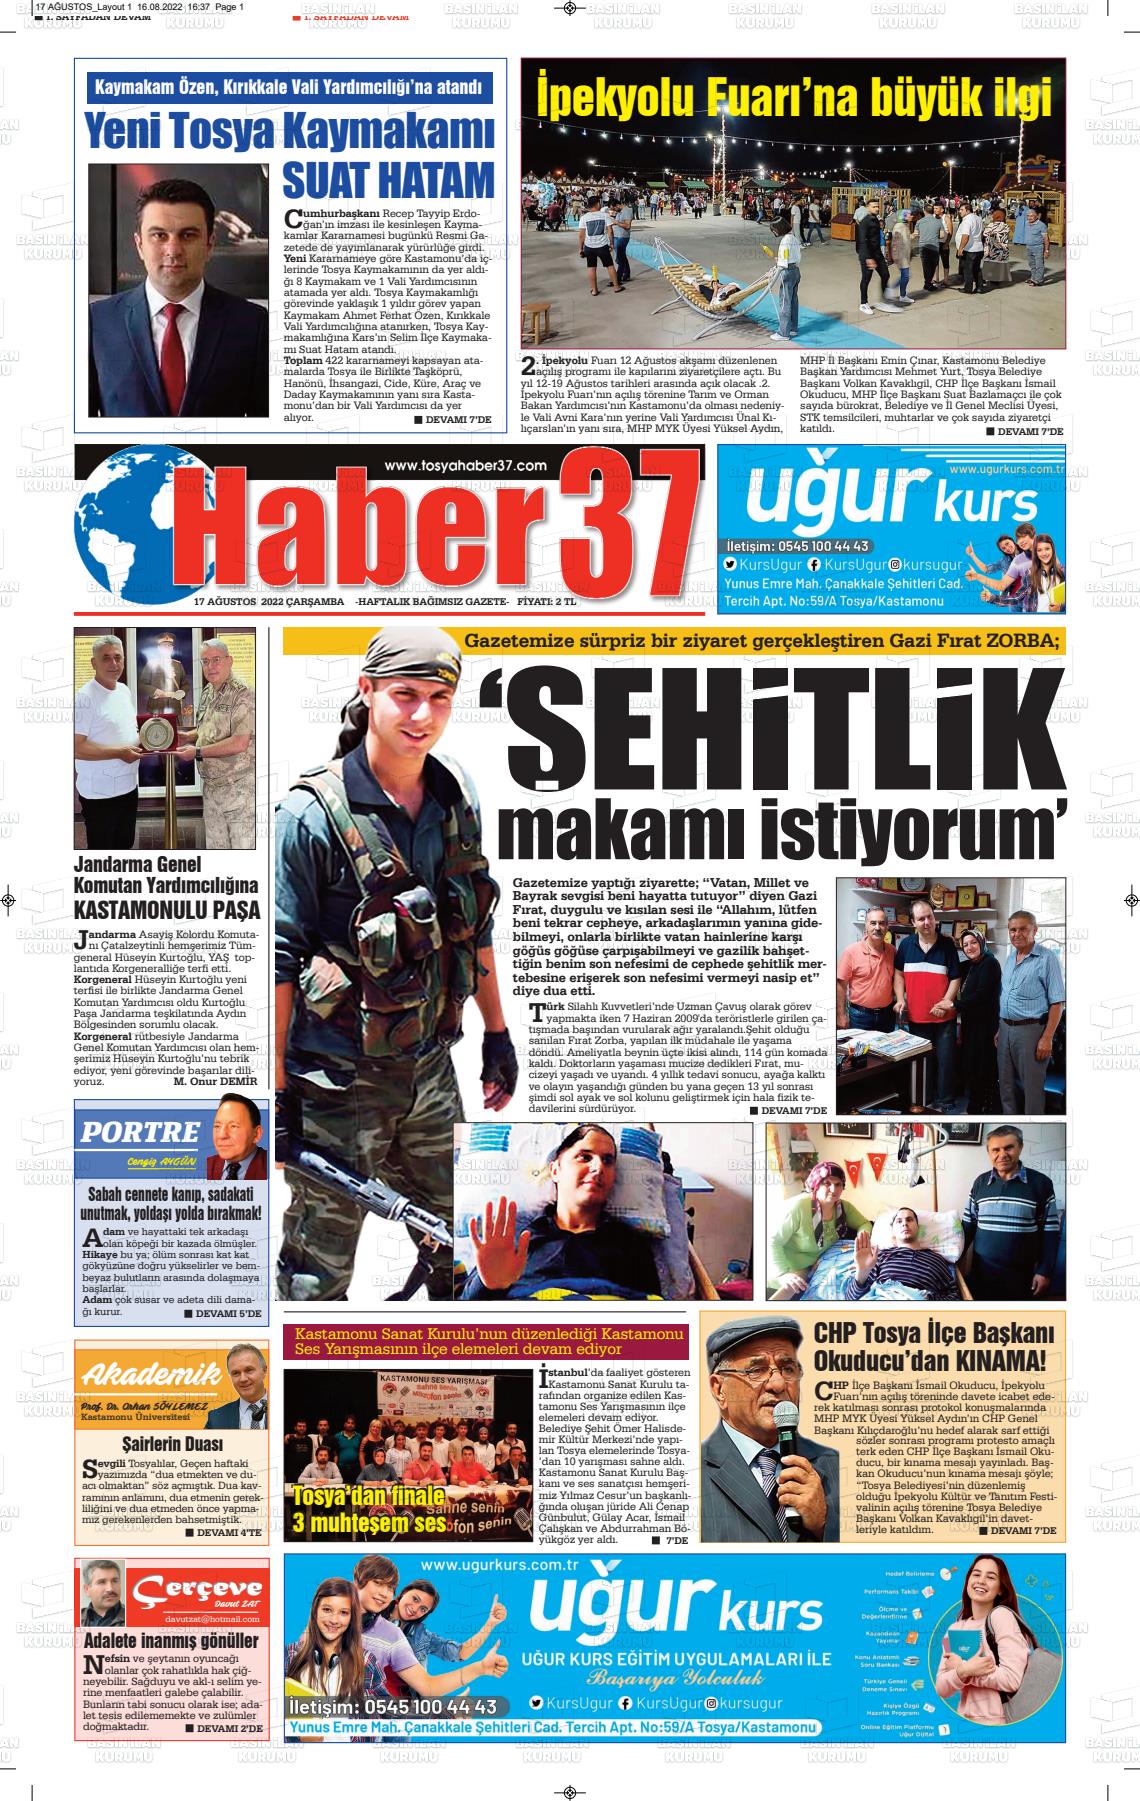 17 Ağustos 2022 Haber37 Gazete Manşeti